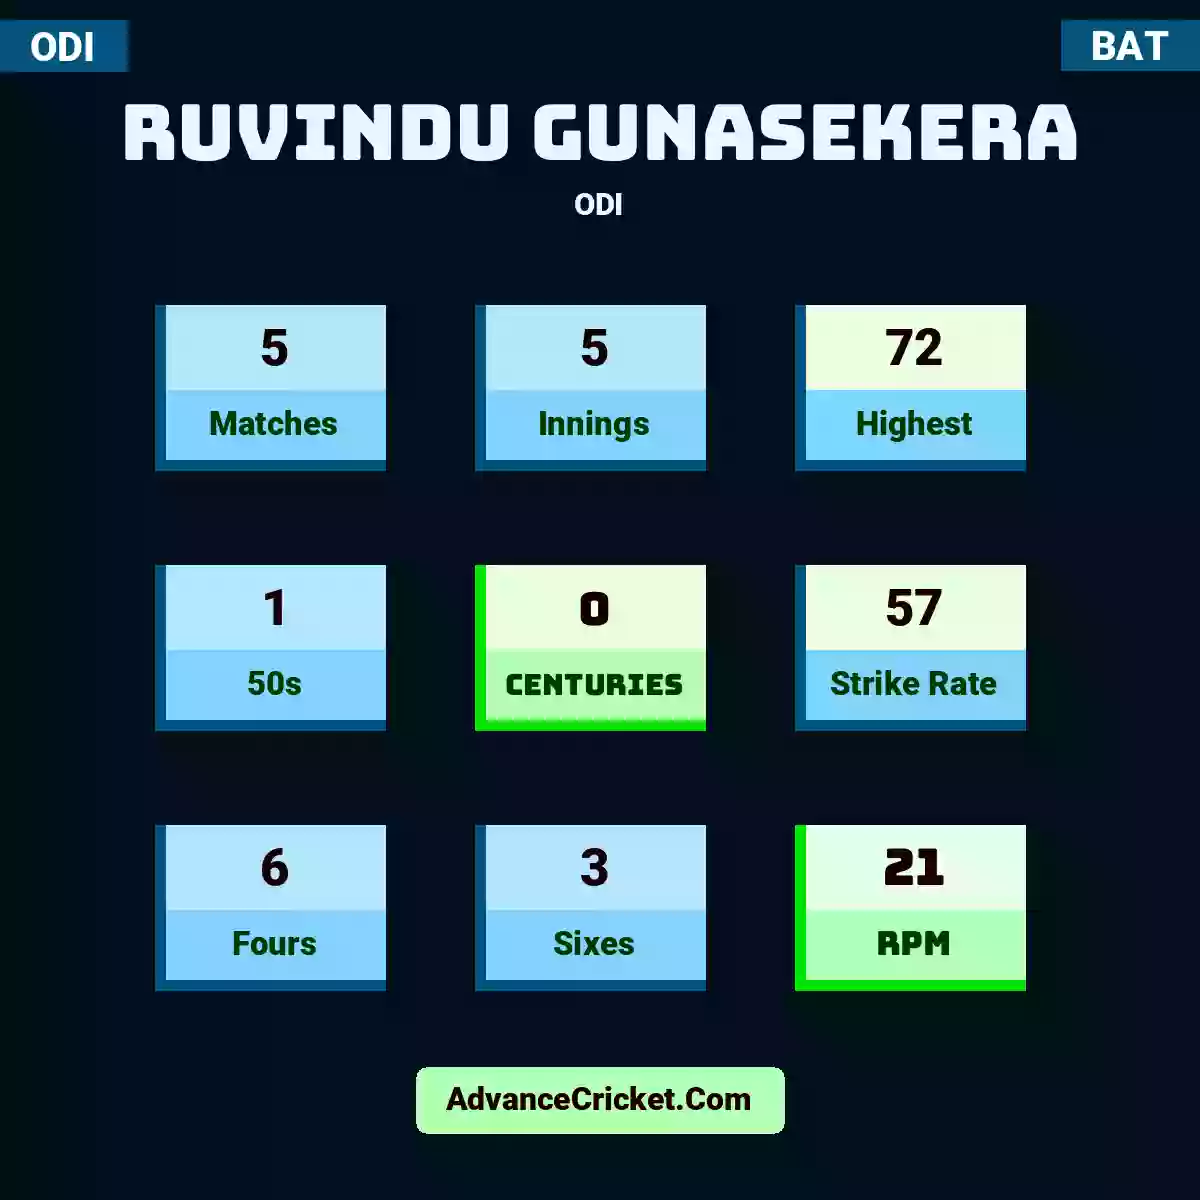 Ruvindu Gunasekera ODI , Ruvindu Gunasekera played 5 matches, scored 72 runs as highest, 1 half-centuries, and 0 centuries, with a strike rate of 57. R.Gunasekera hit 6 fours and 3 sixes, with an RPM of 21.